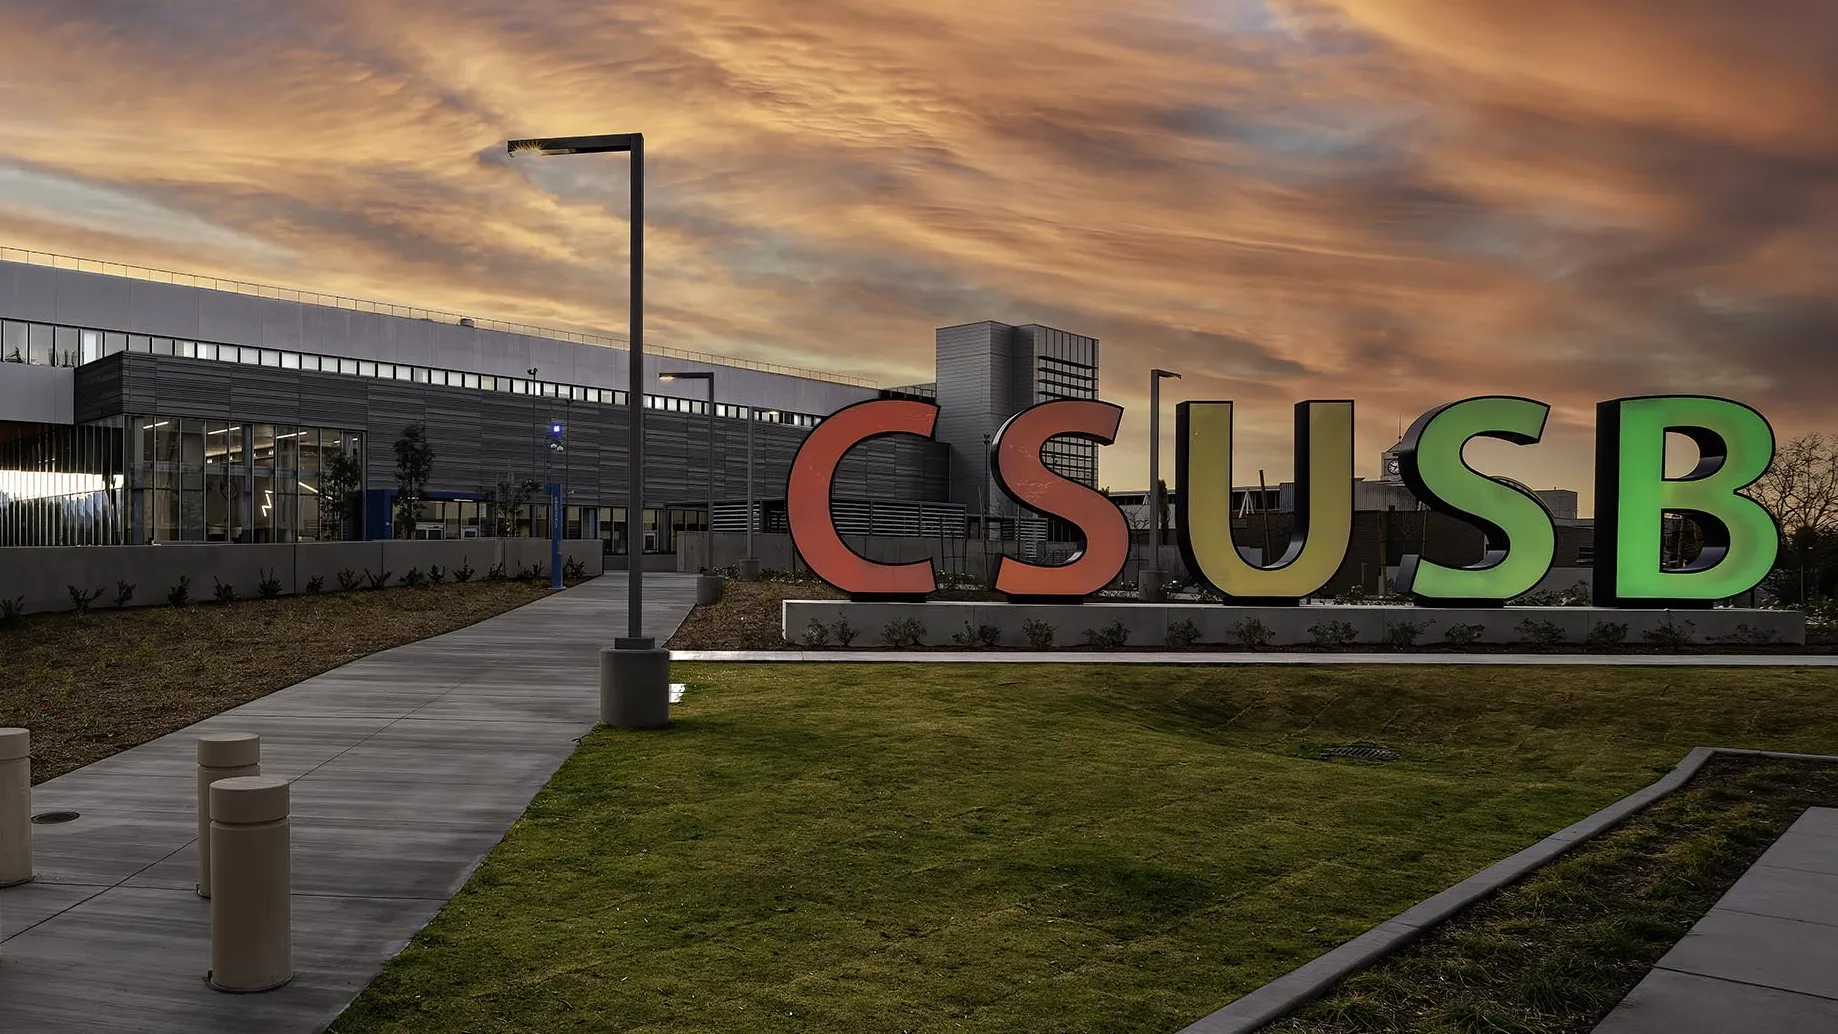 The CSUSB sign at SMSU North.